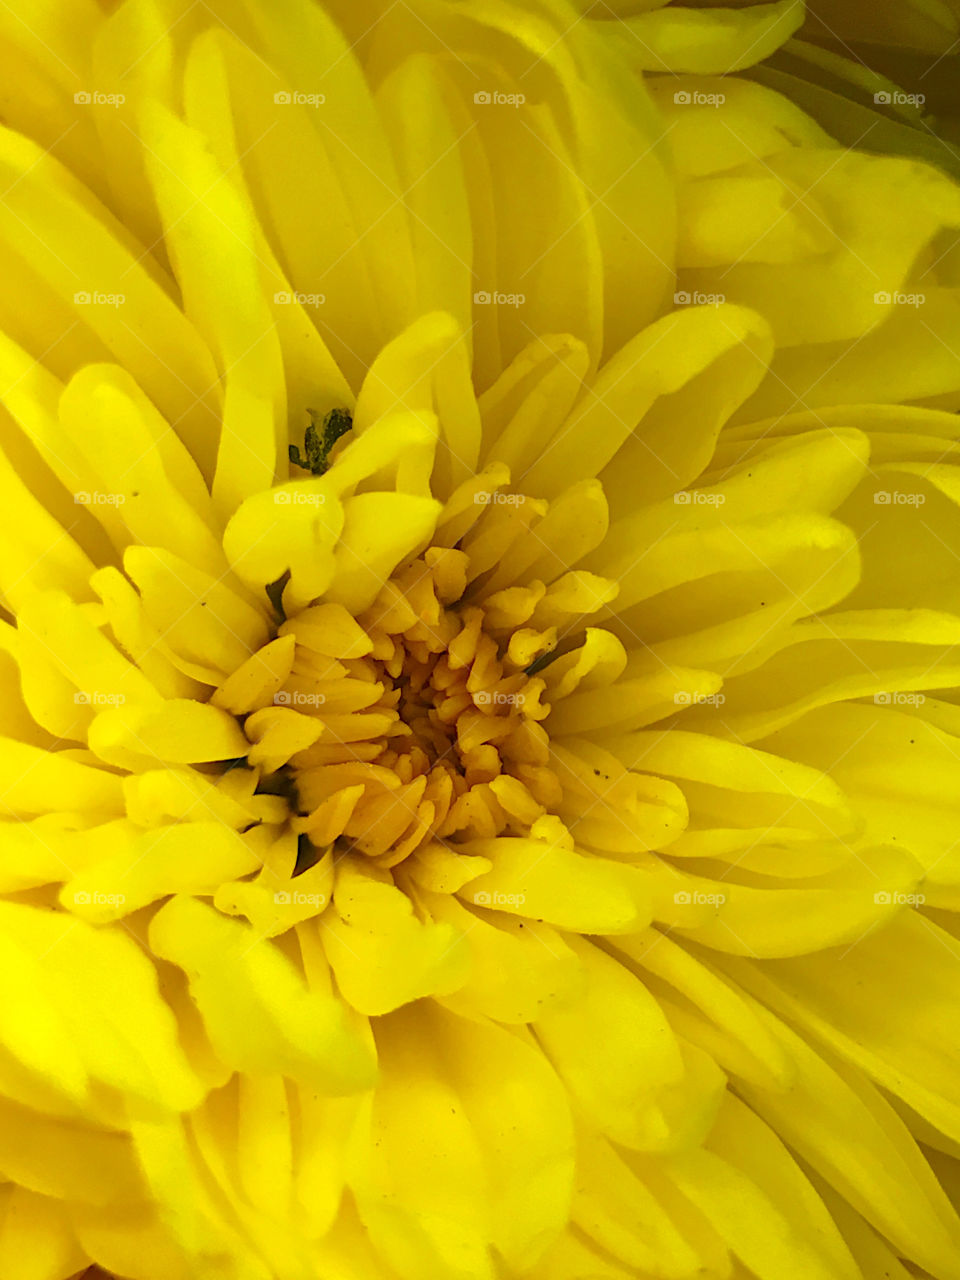 Yellow Bloom

